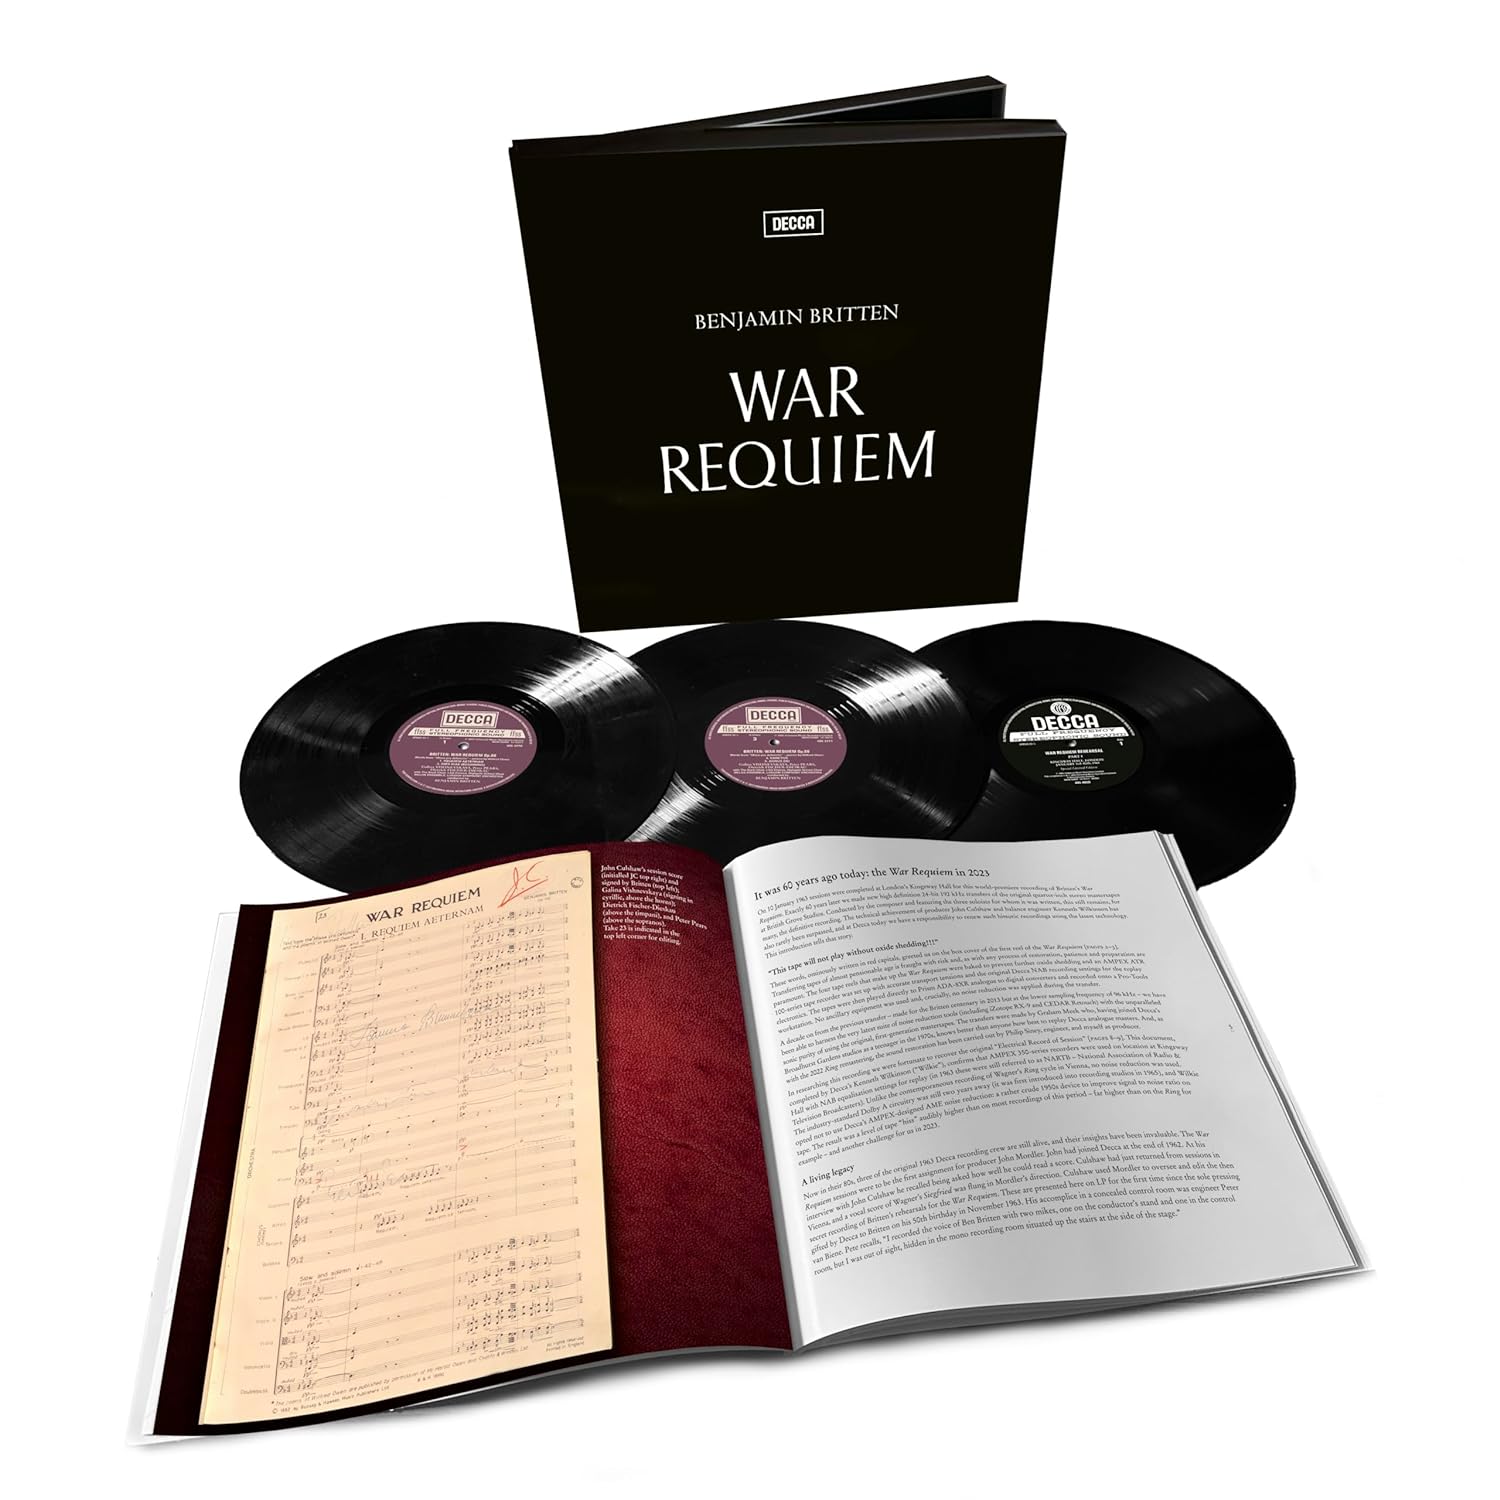 Benjamin Britten & London Symphony Orchestra - War Requiem